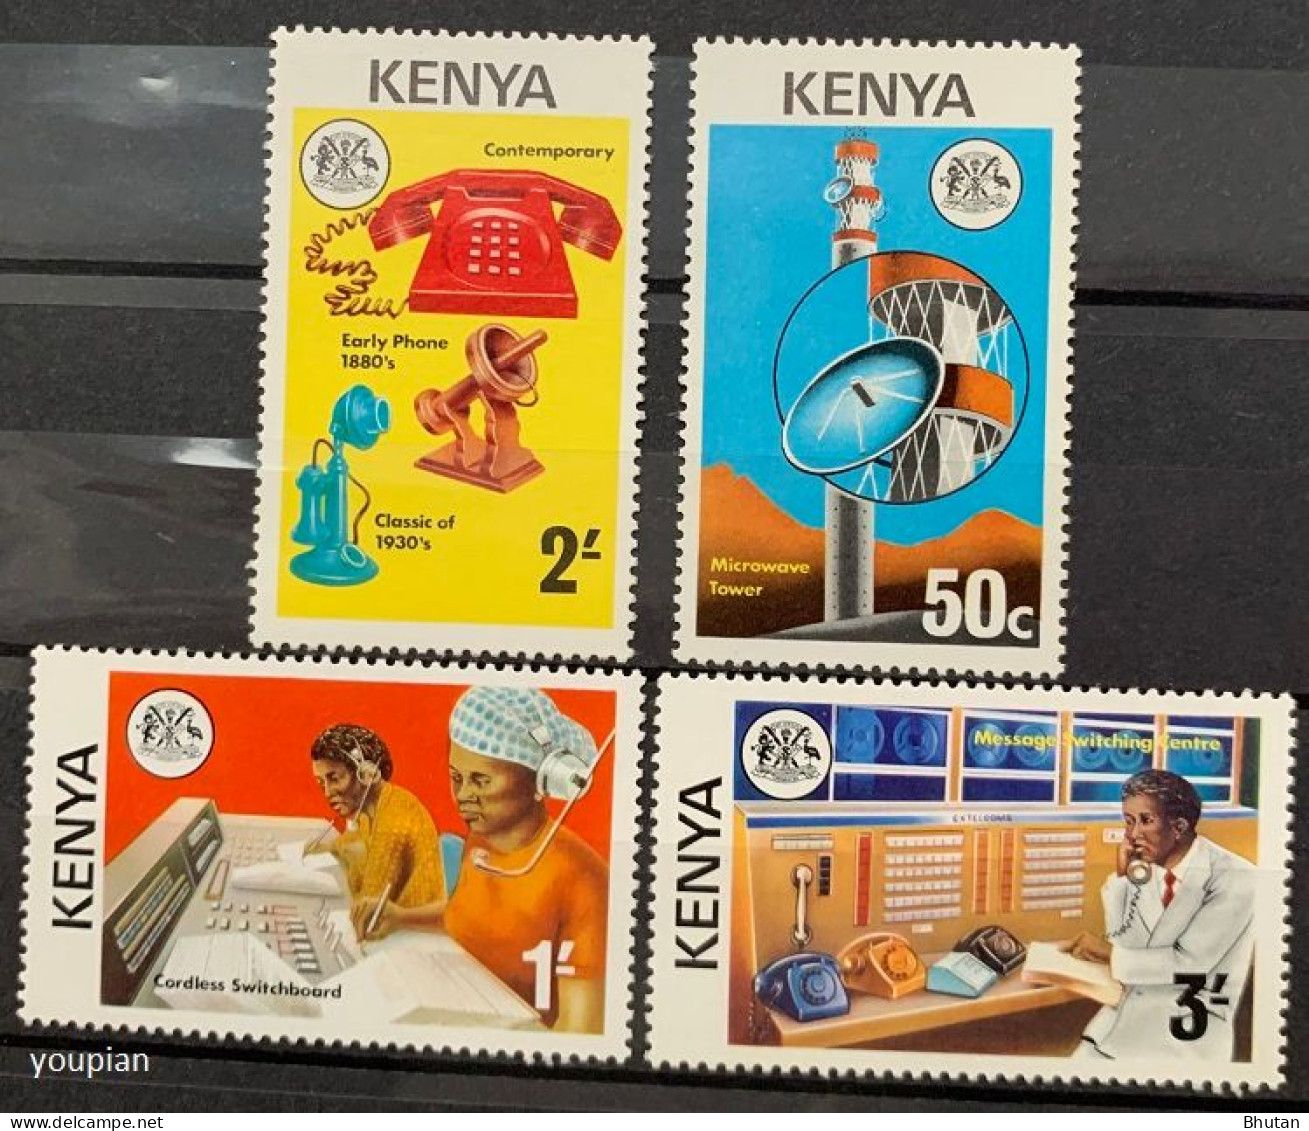 Kenya 1976, Telecommunications Development In East Africa, MNH Stamps Set - Kenya (1963-...)